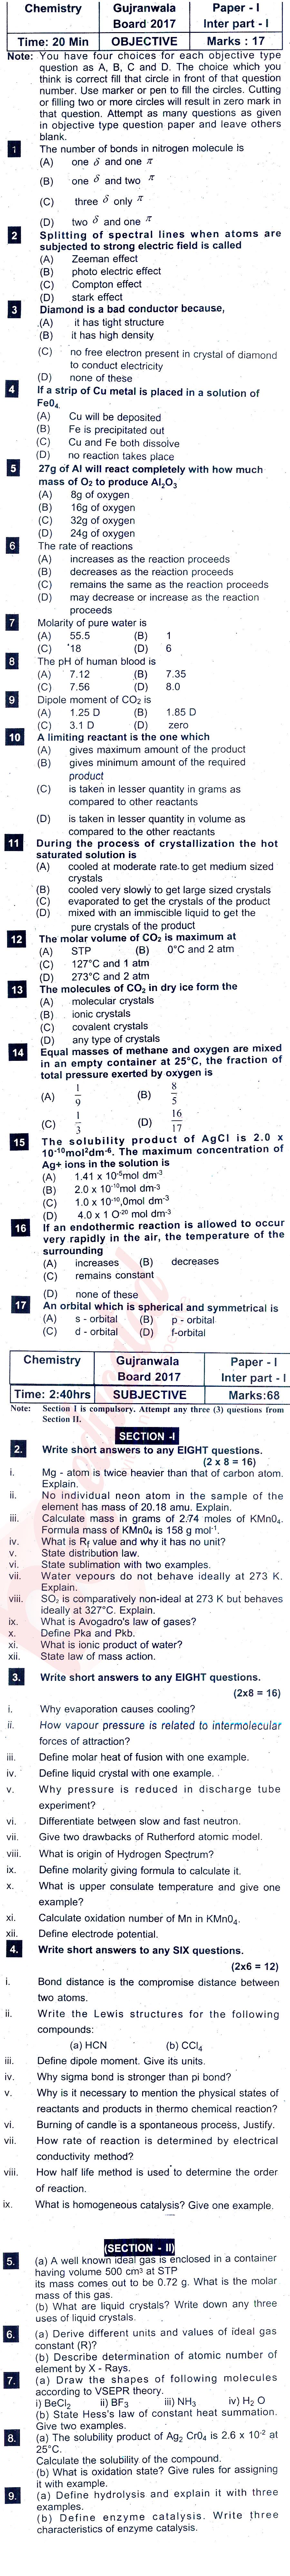 Chemistry FSC Part 1 Past Paper Group 1 BISE Gujranwala 2017